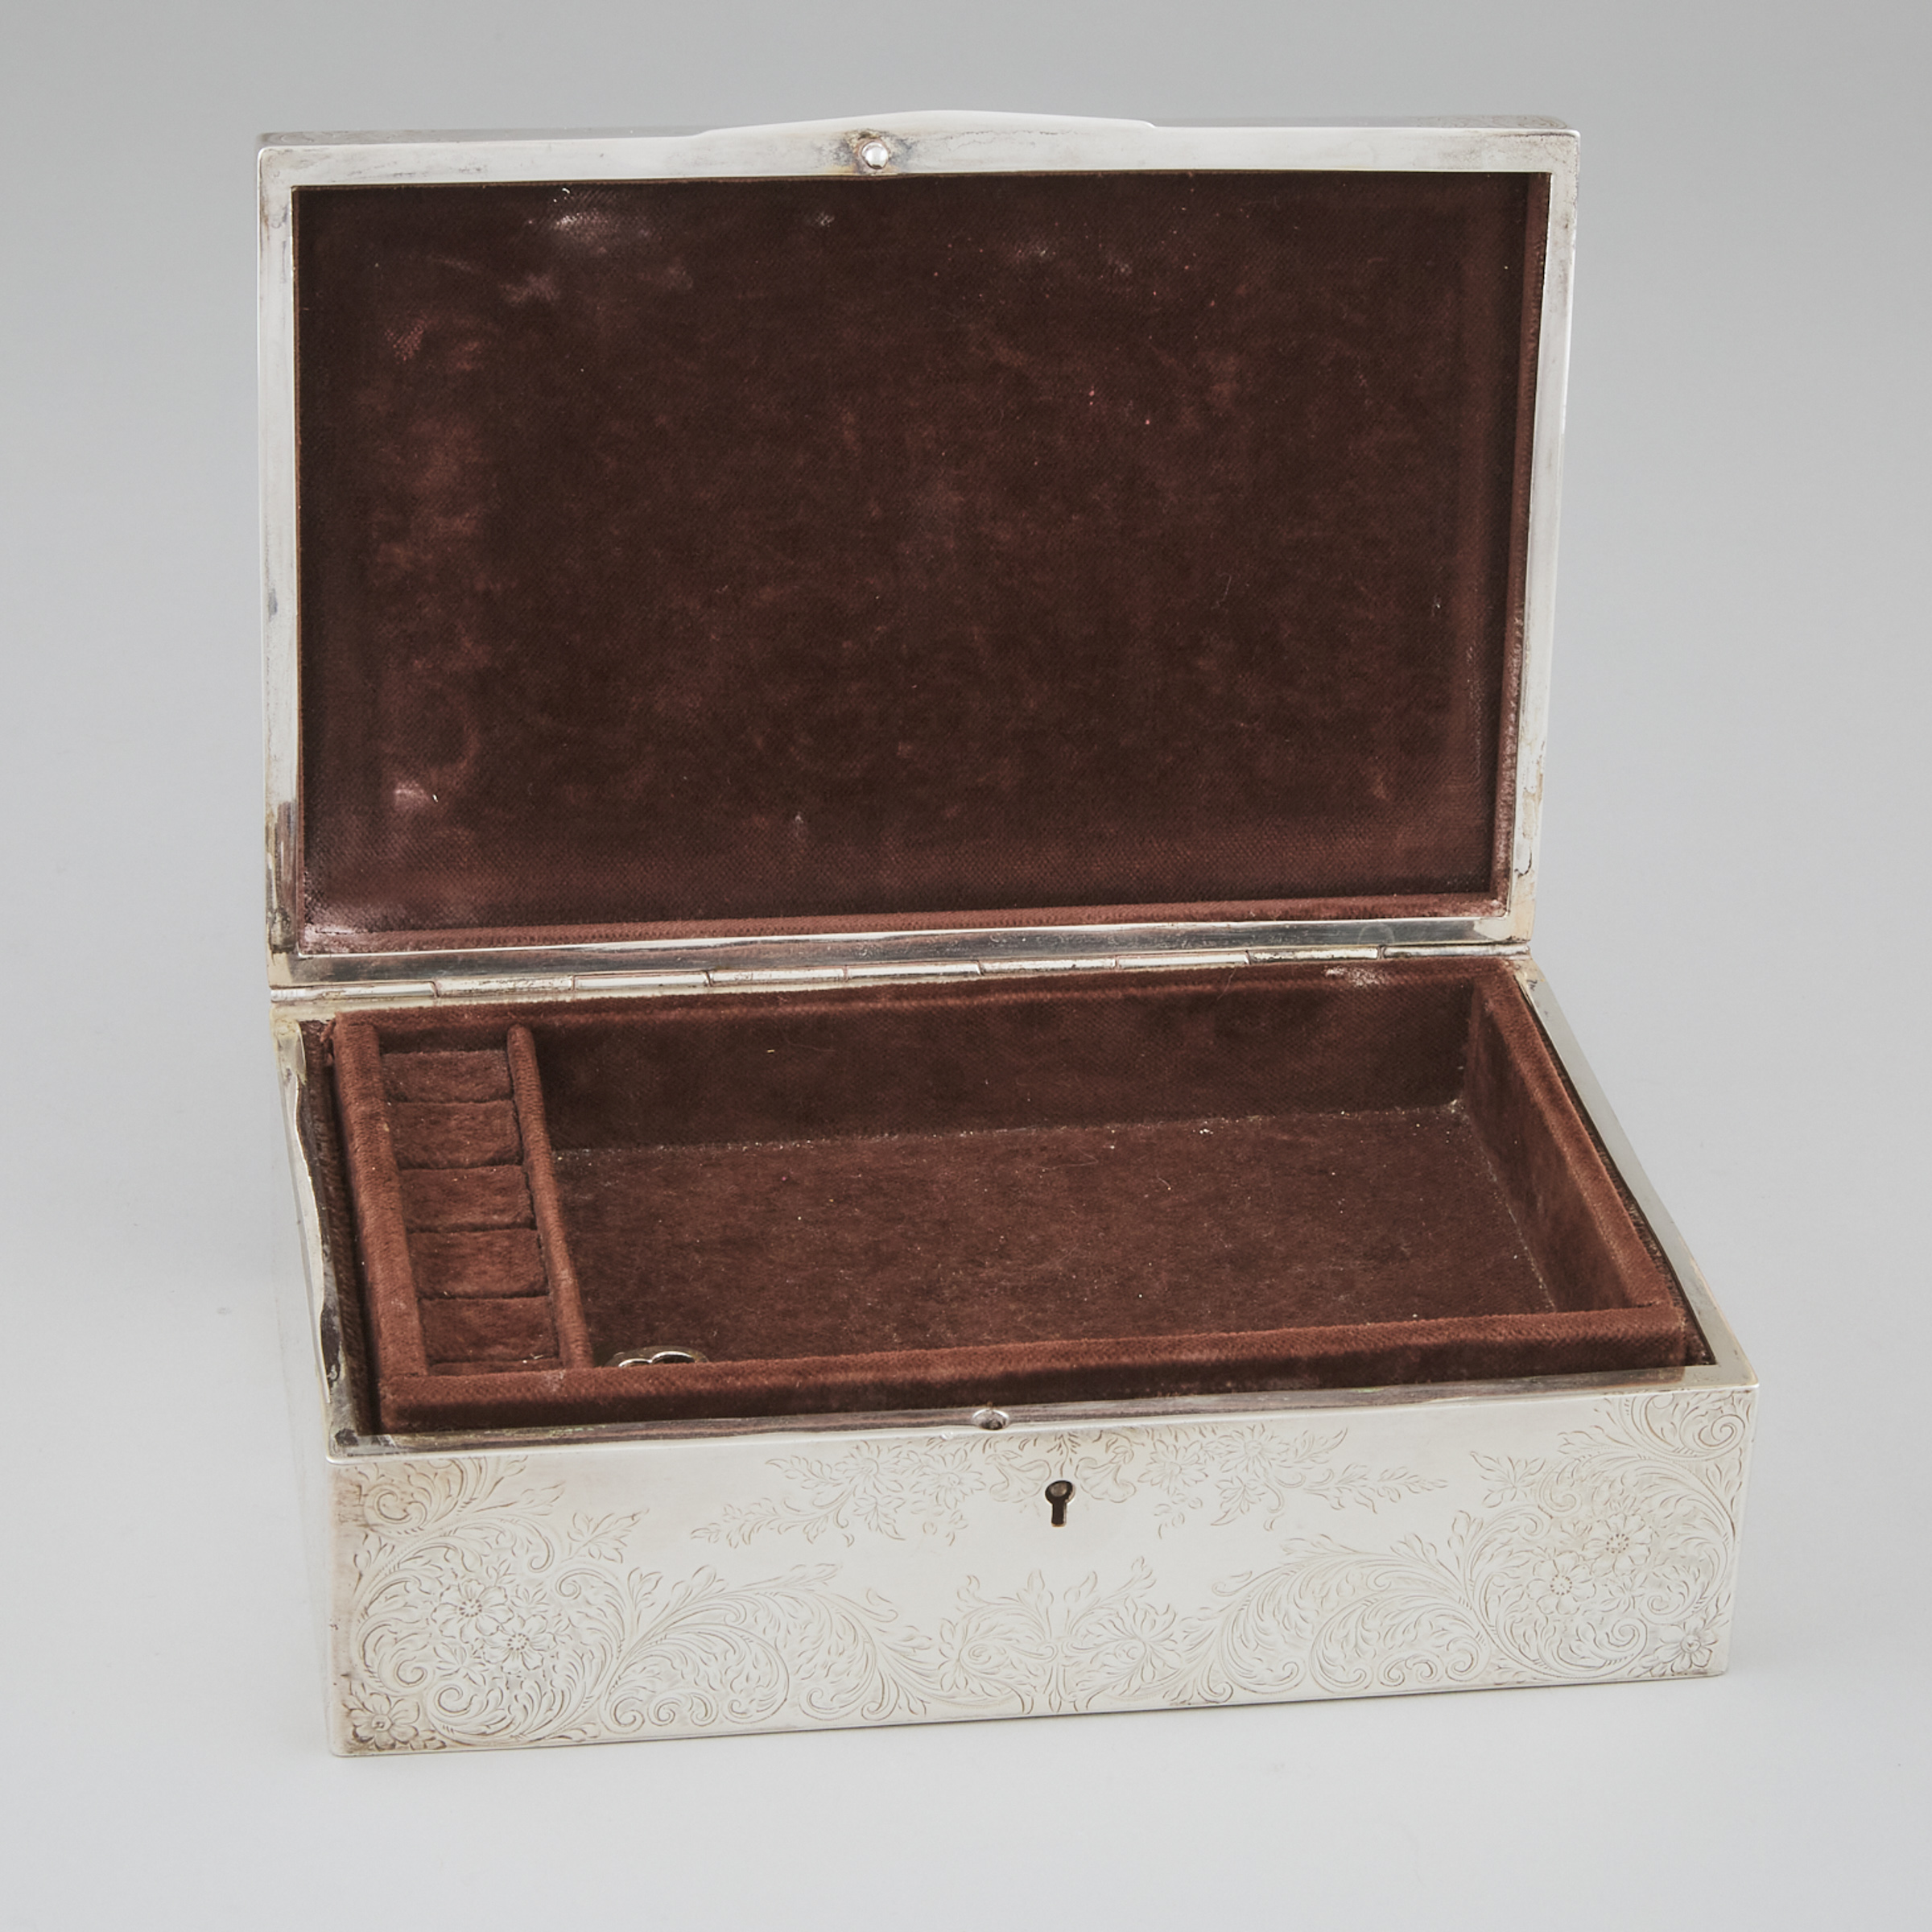 American Silver Rectangular Jewellery Box, John Chattellier, Newark, N.J., for Black, Starr & Frost, early 20th century